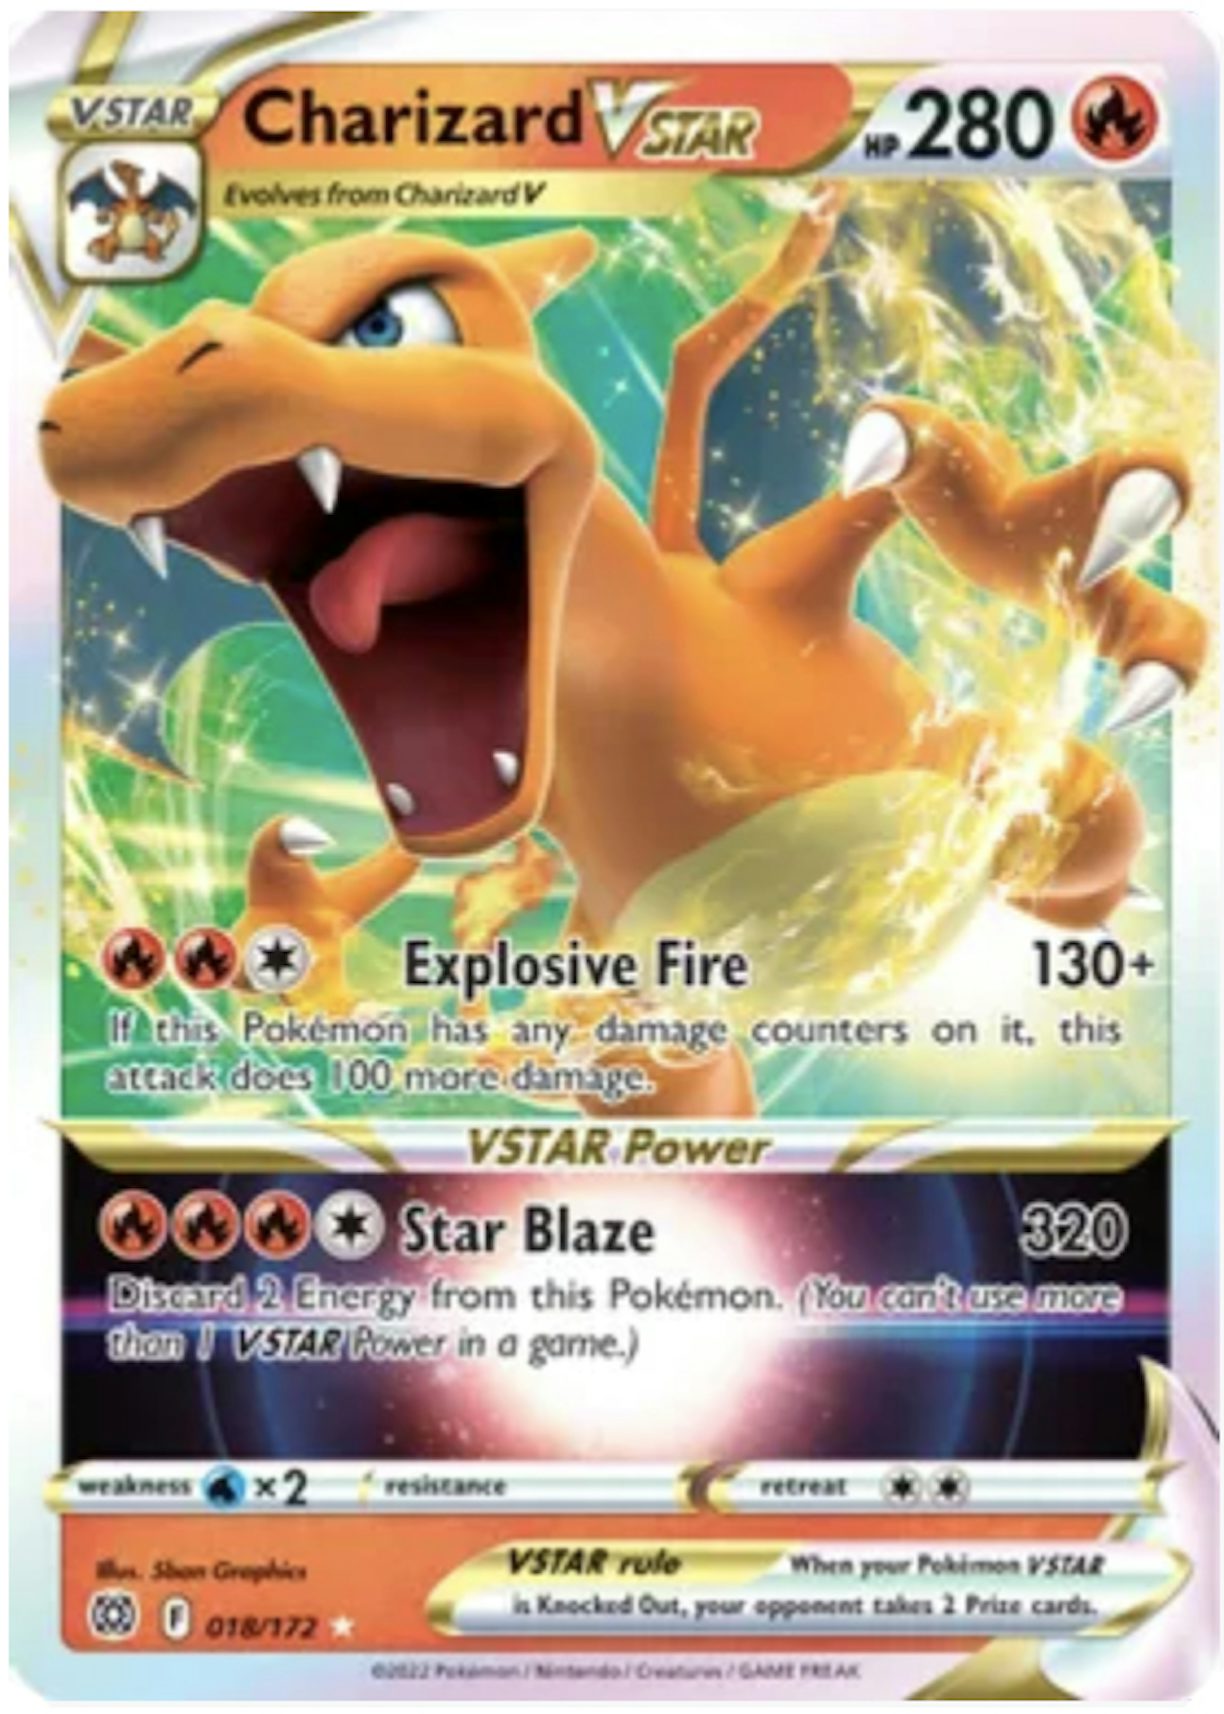 The Cards Of Pokémon TCG: Brilliant Stars Part 19: Arceus V & VSTAR